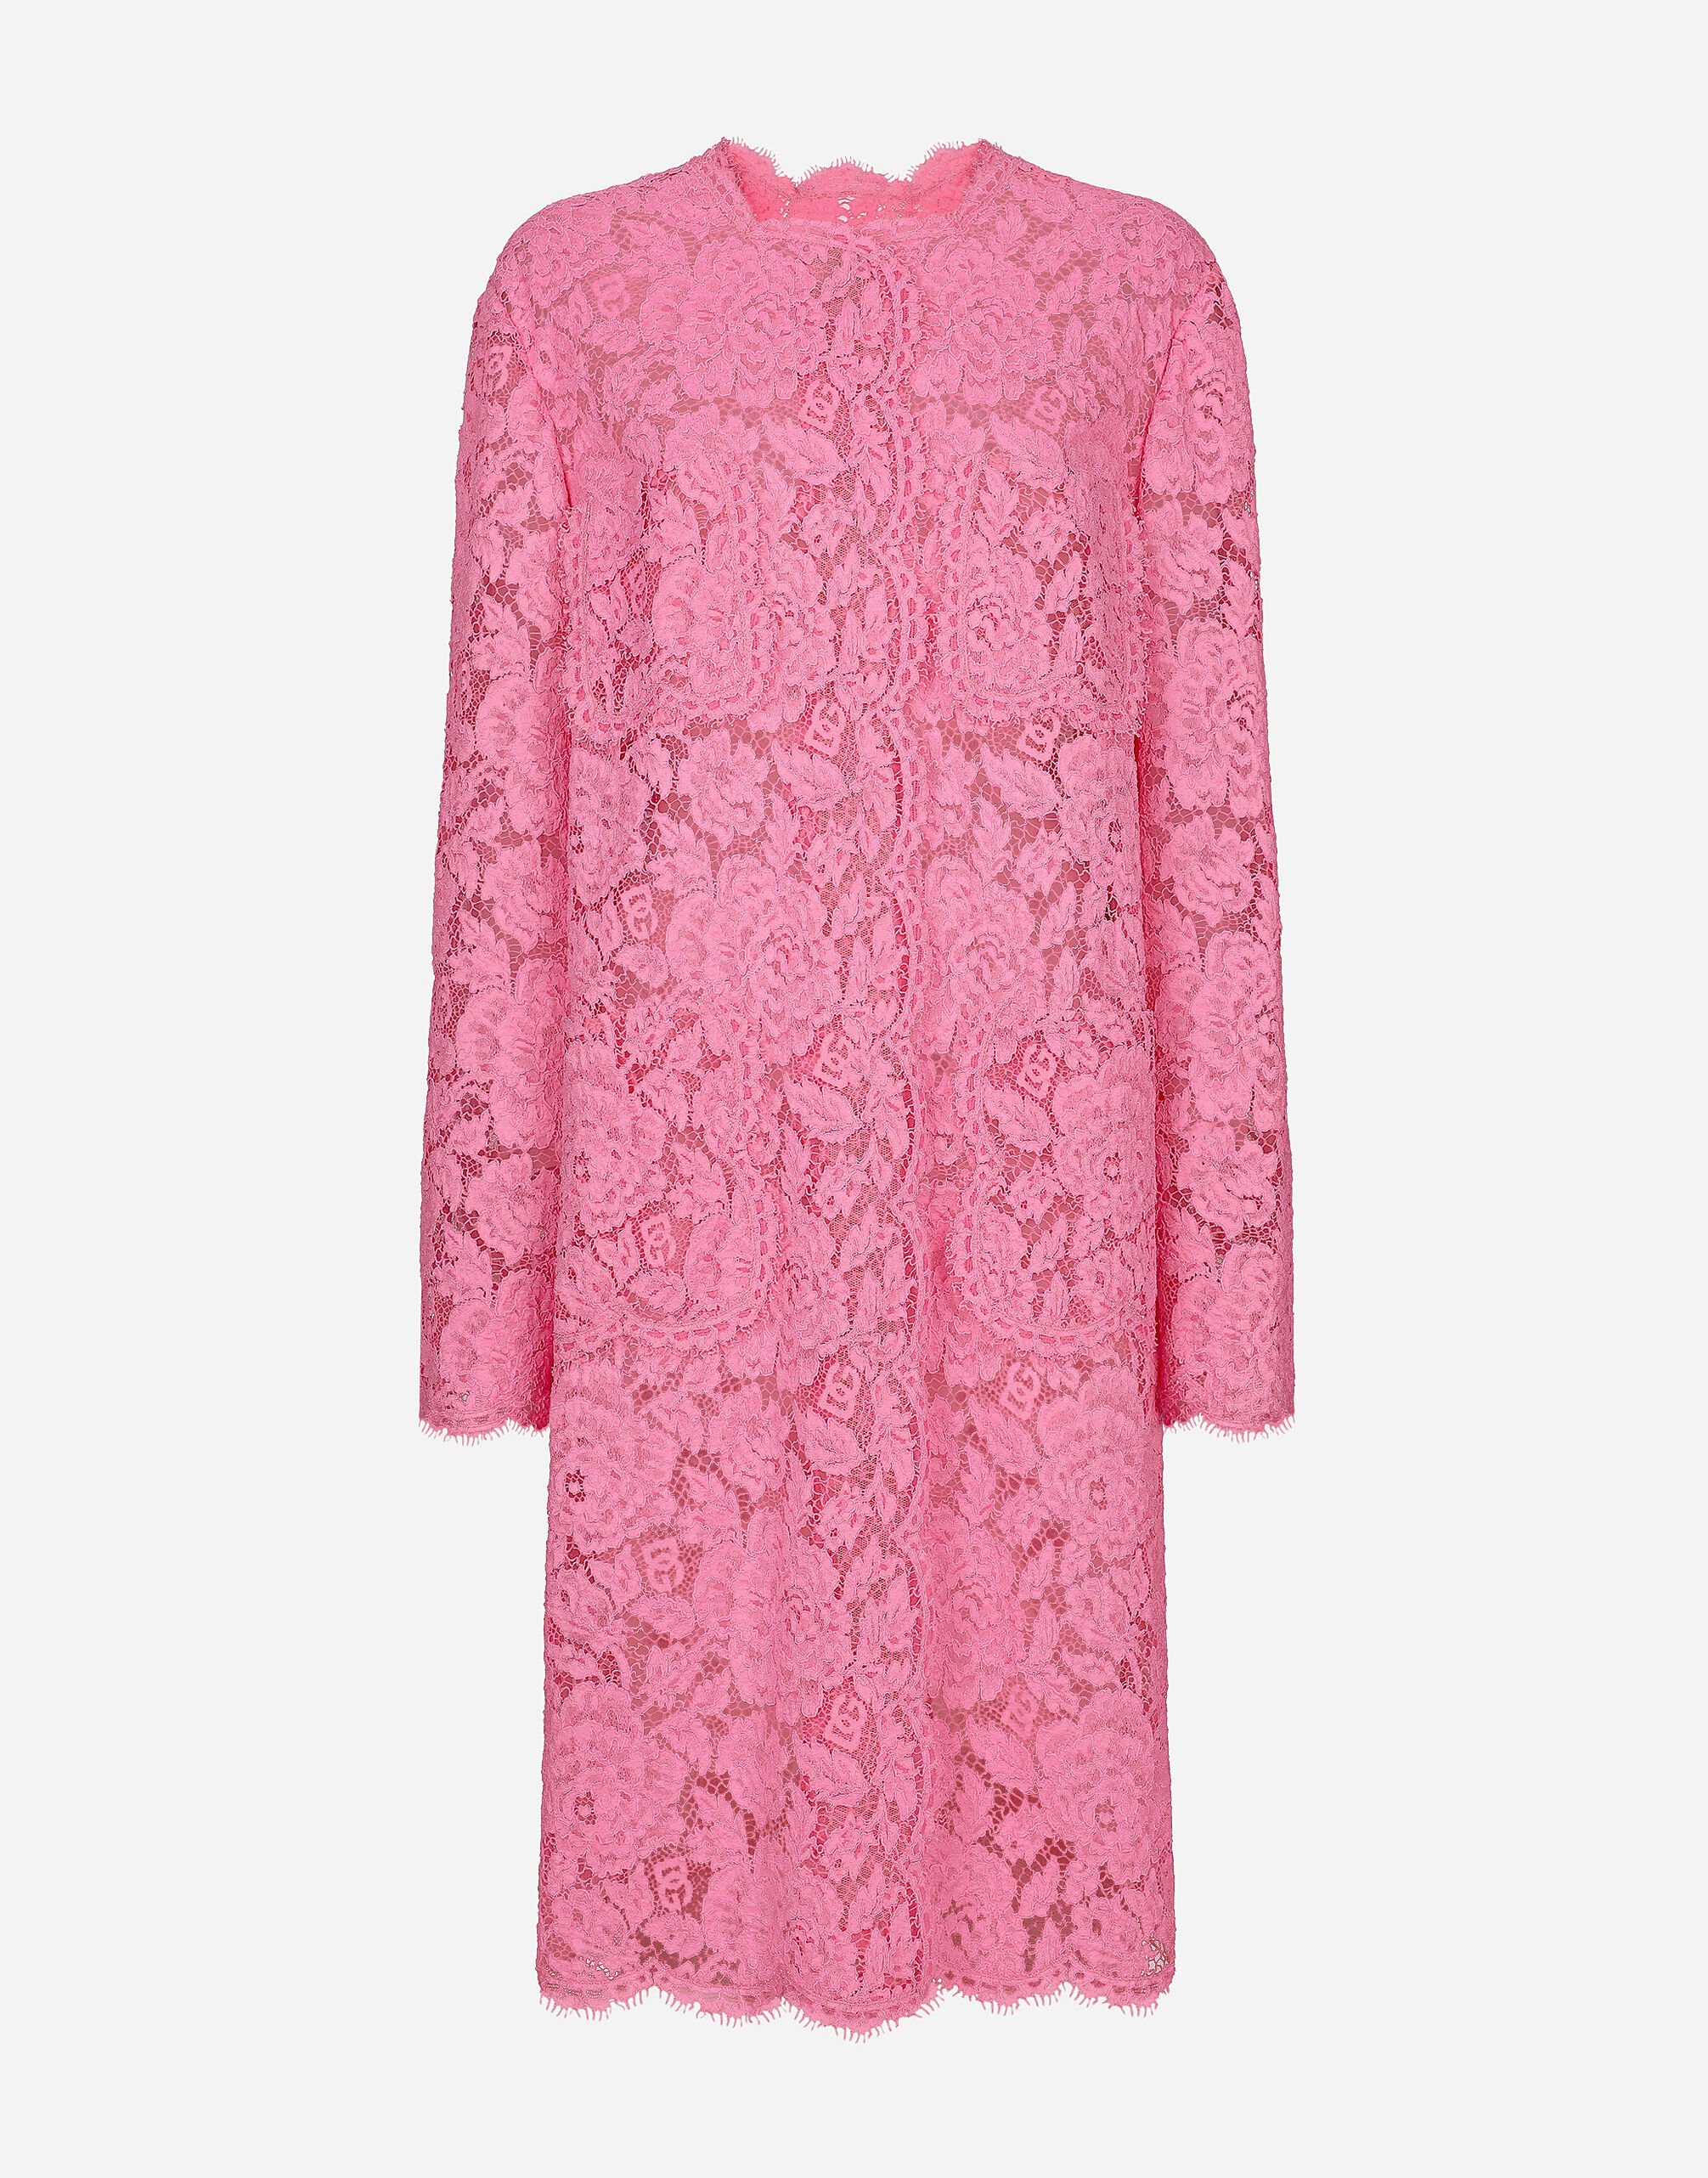 Dolce & Gabbana Branded floral cordonetto lace coat Print F0E1YTIS1VH